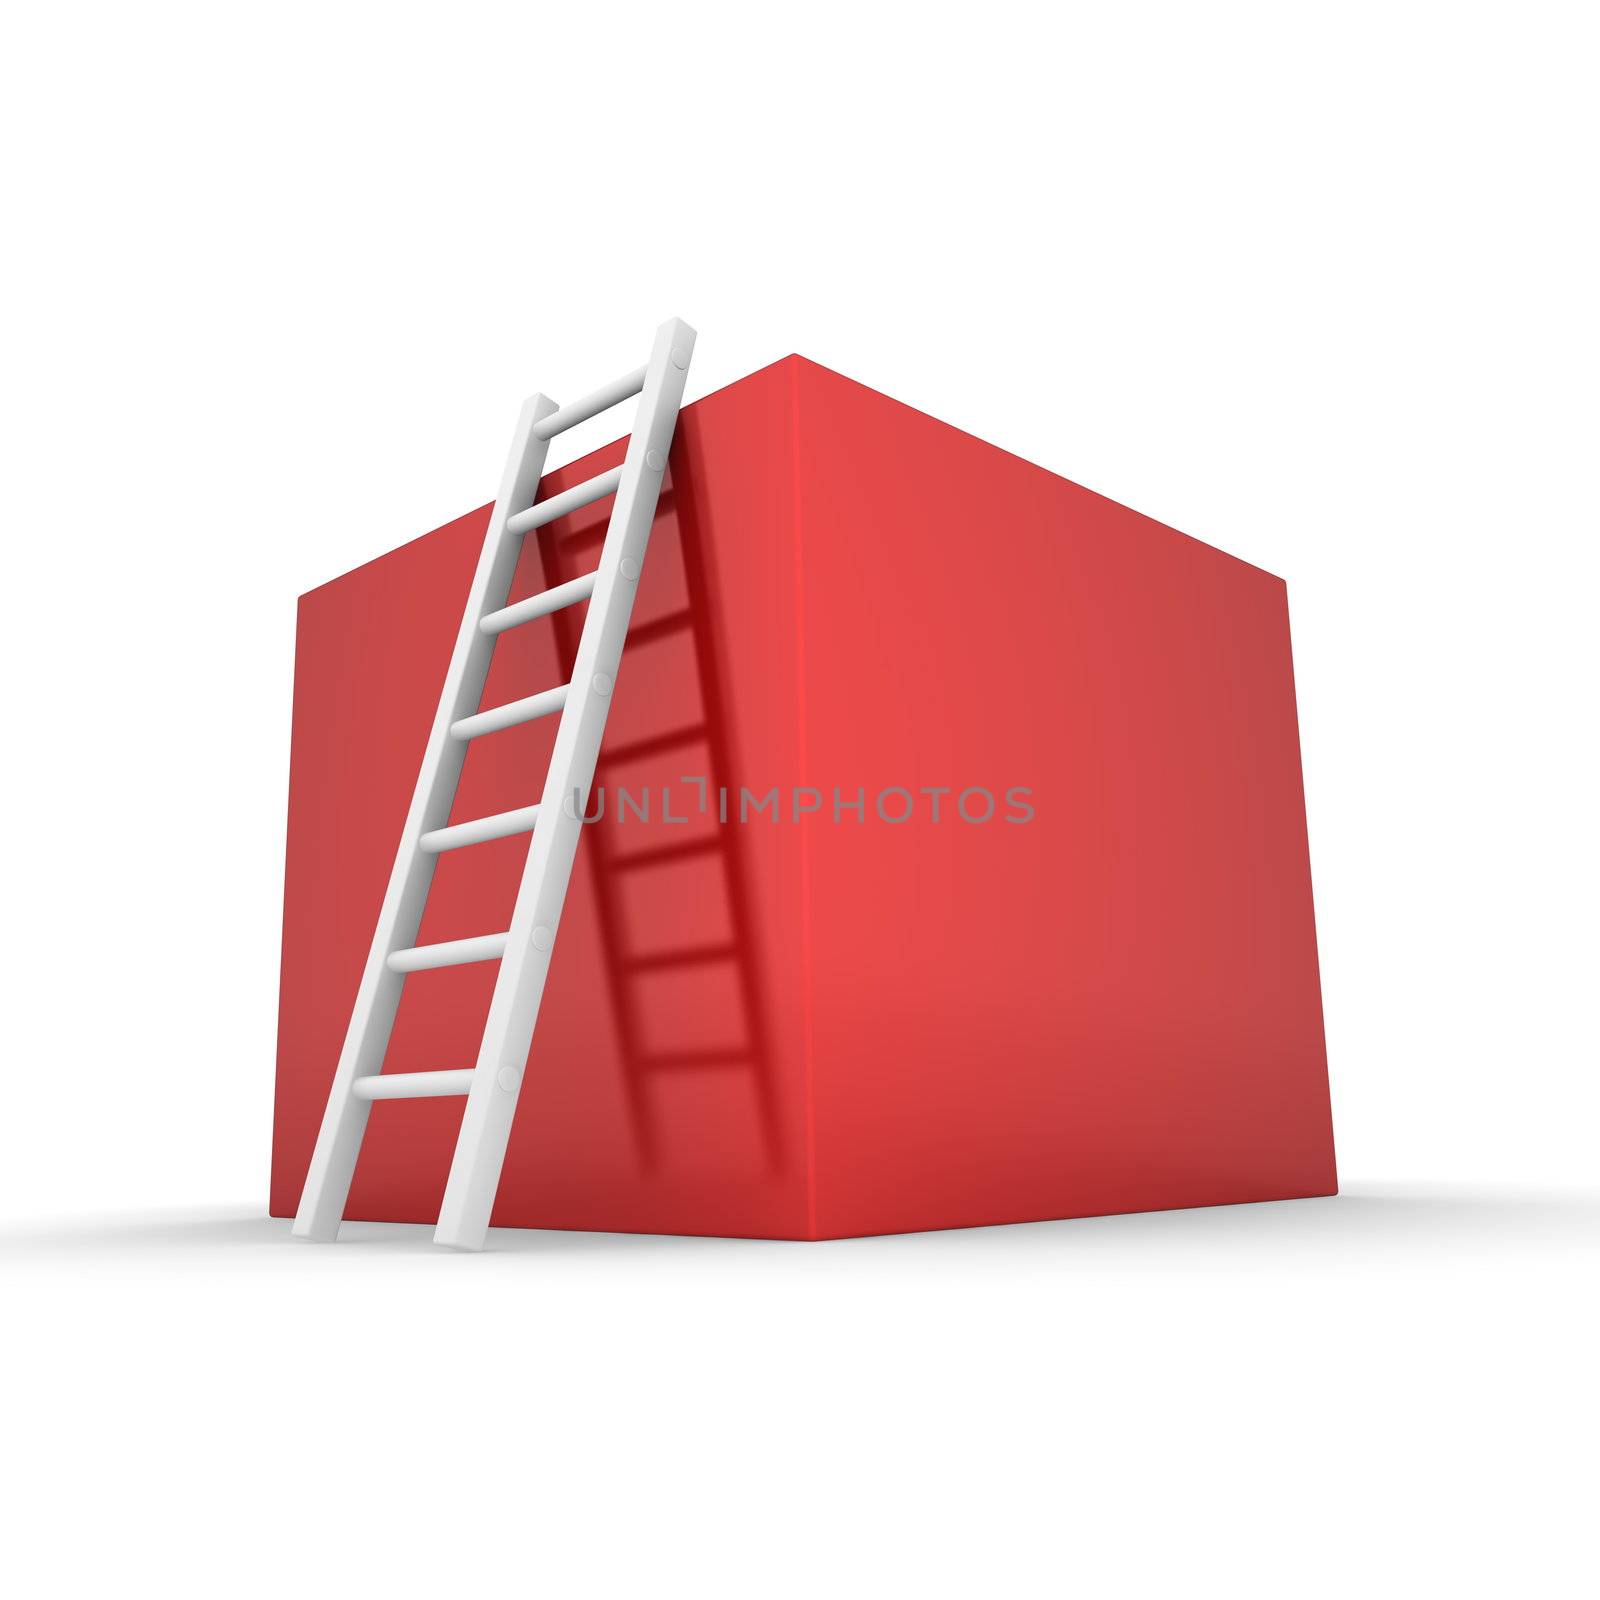 Climb up the Shiny Red Box by PixBox